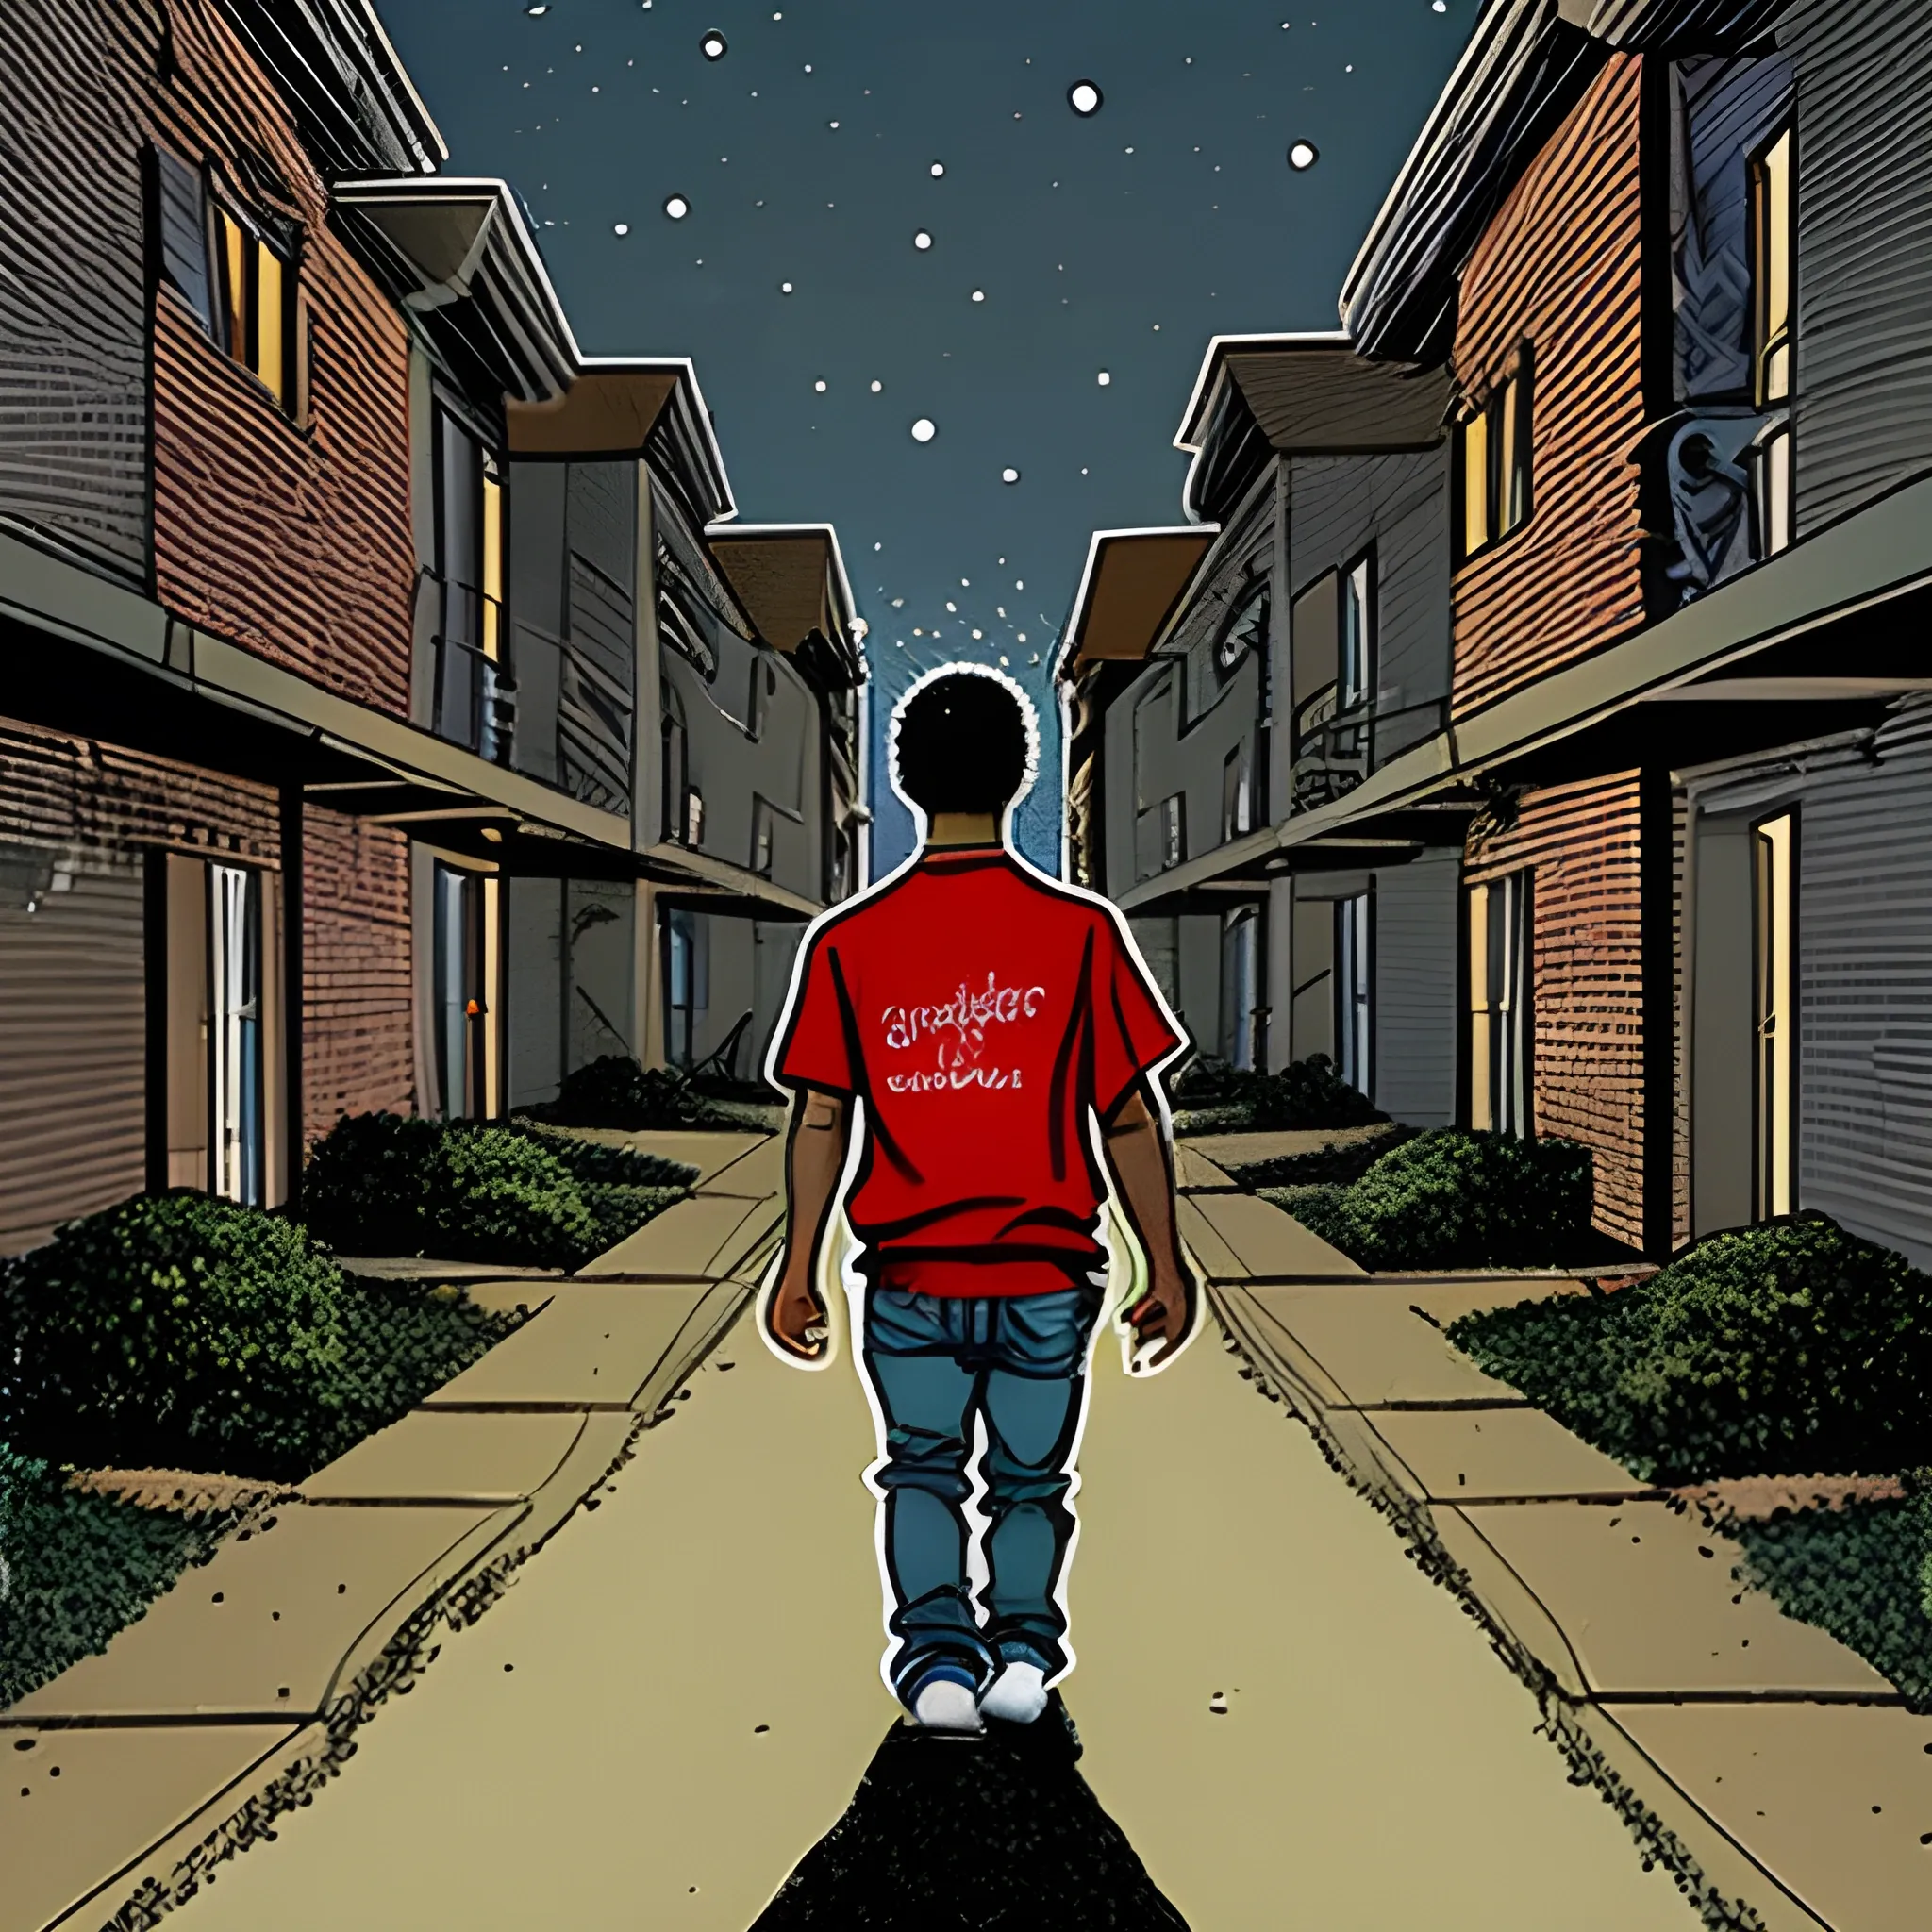 A 21-year-old blood gang member walking backwards through an American housing project, at night, Cartoon

